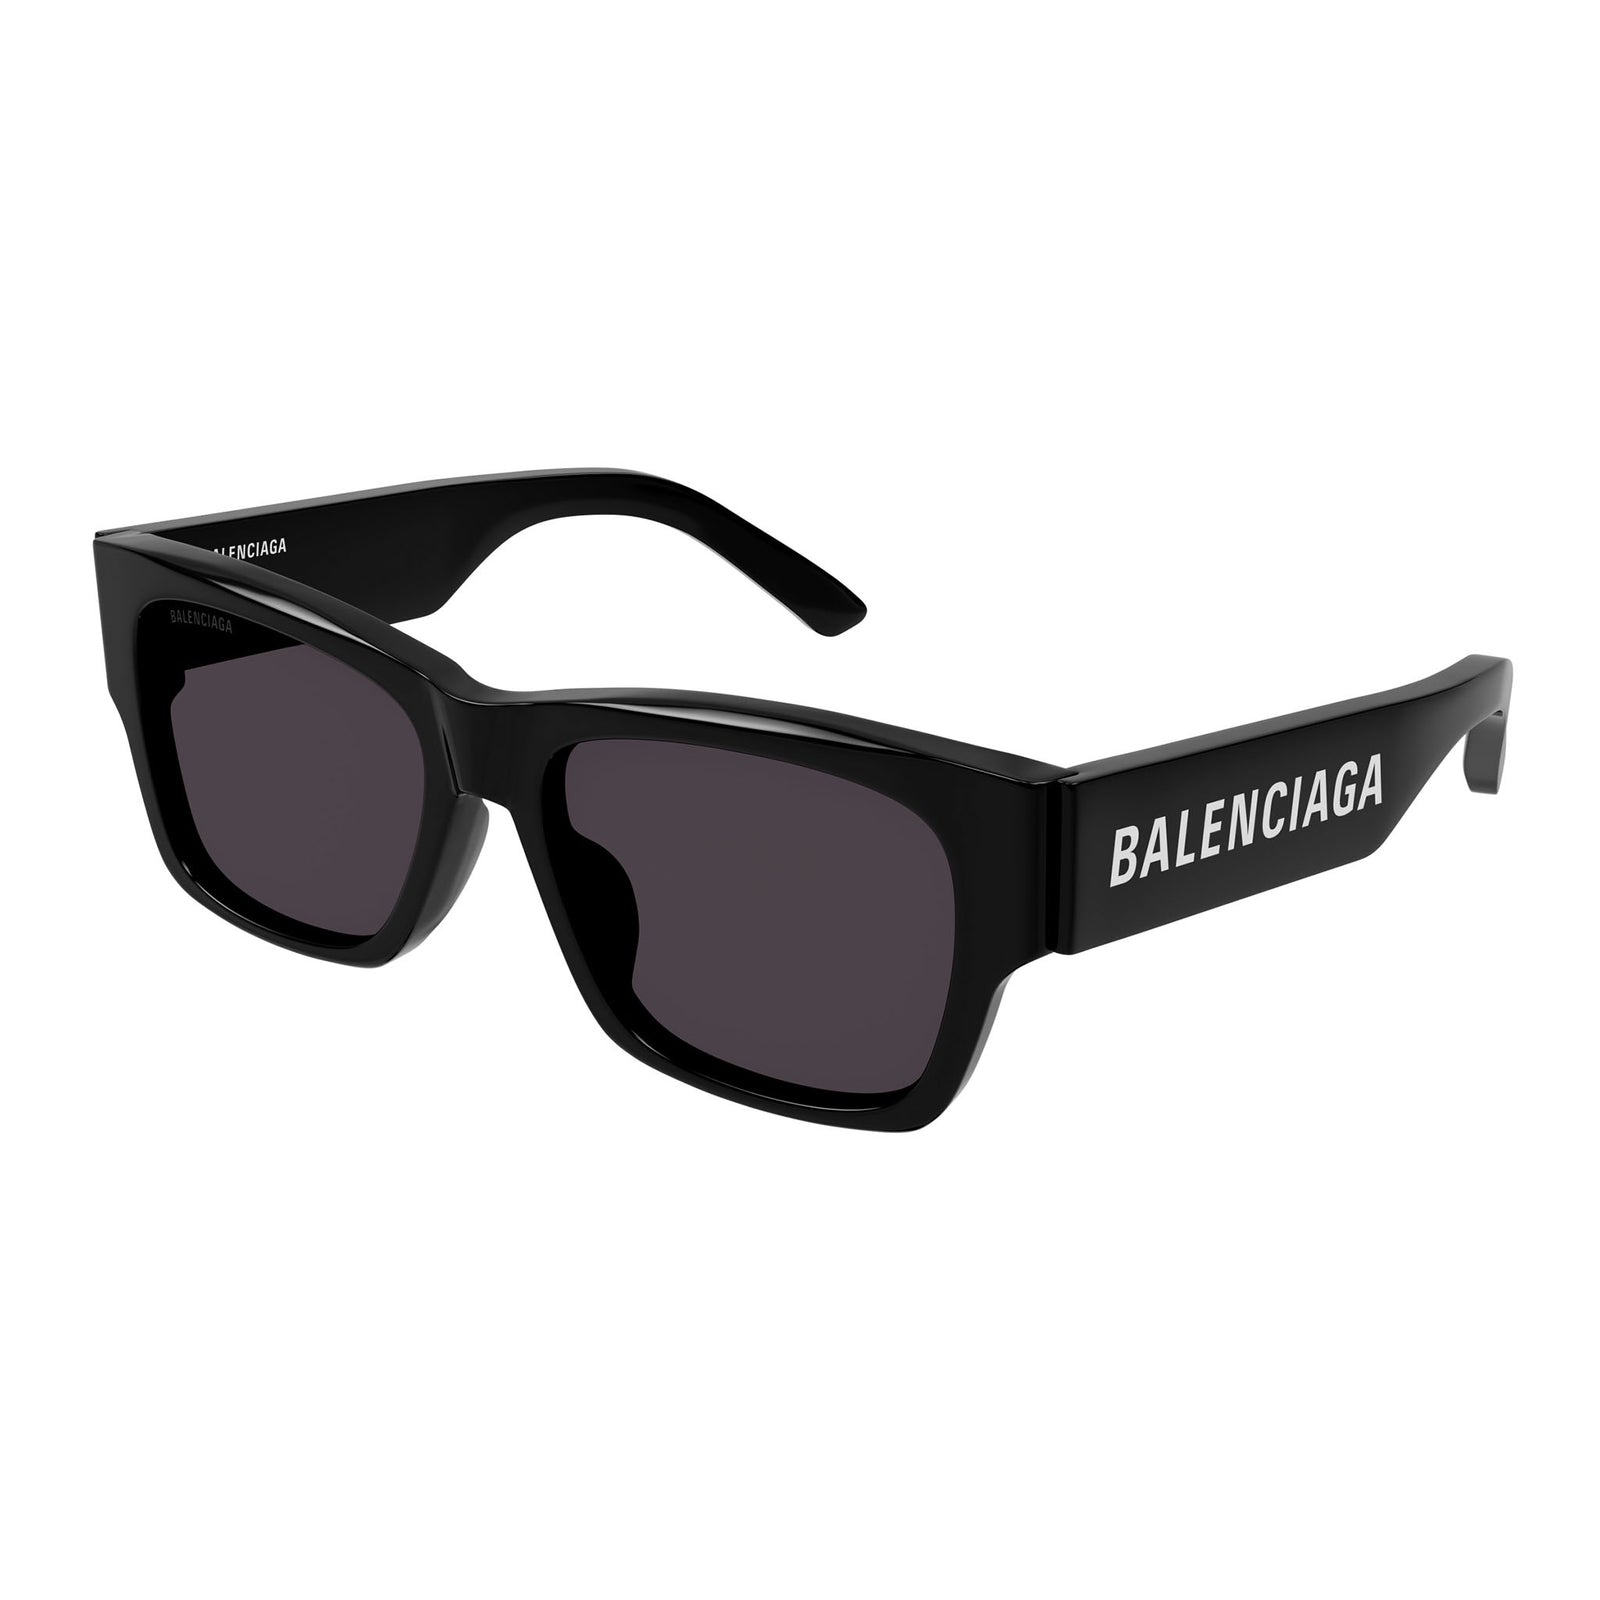 | Buy Sunglasses Online